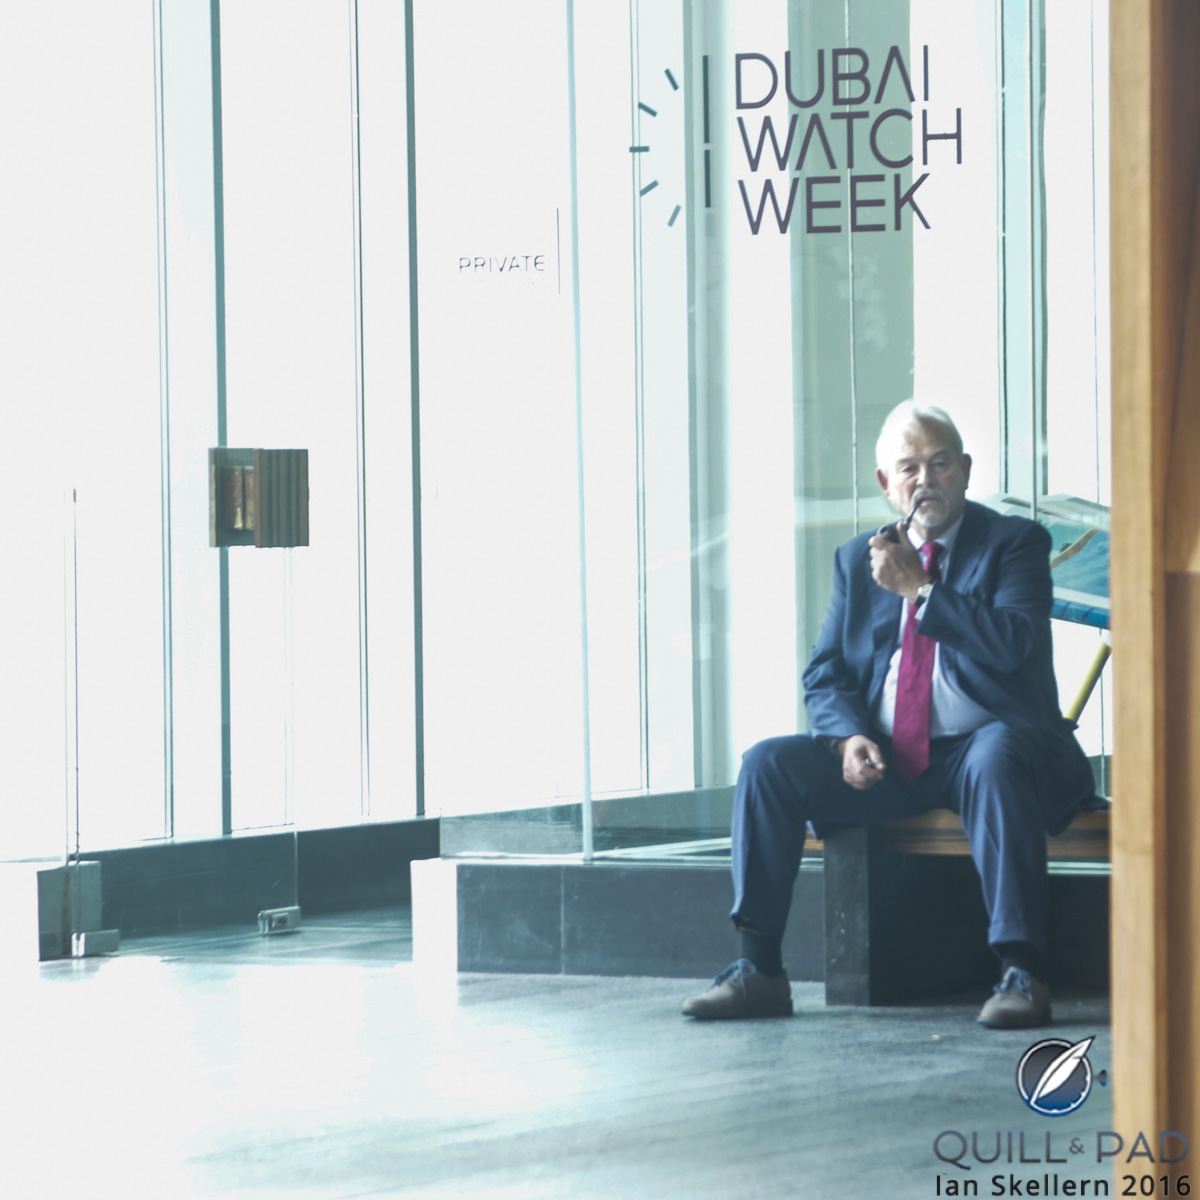 Mr. Philippe Dufour having a well-earned break at Dubai Watch Week 2016